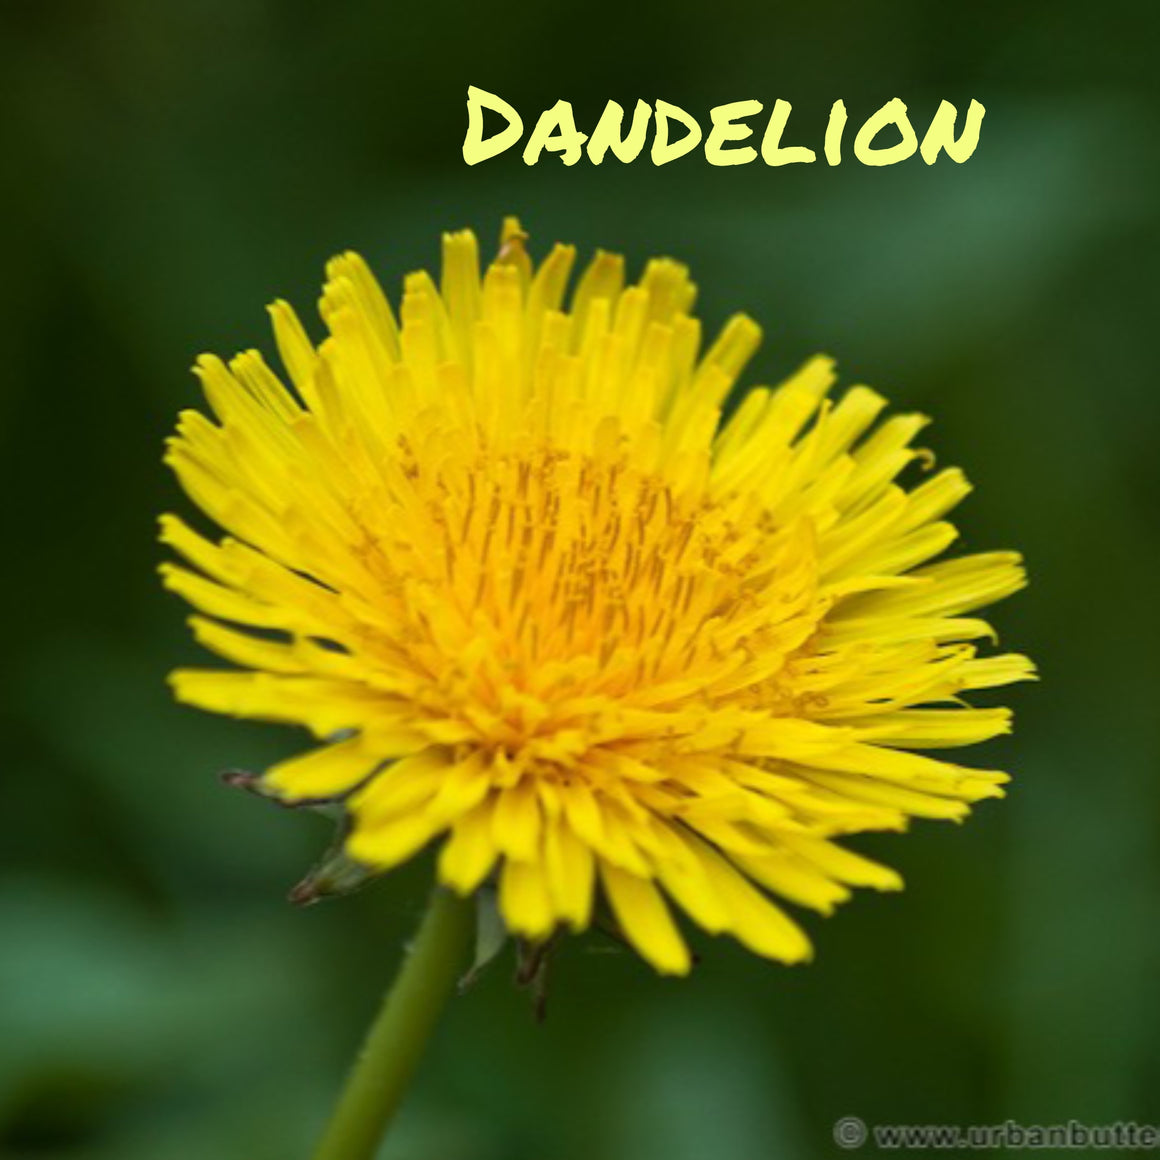 Trickster Teachers - Dandelion